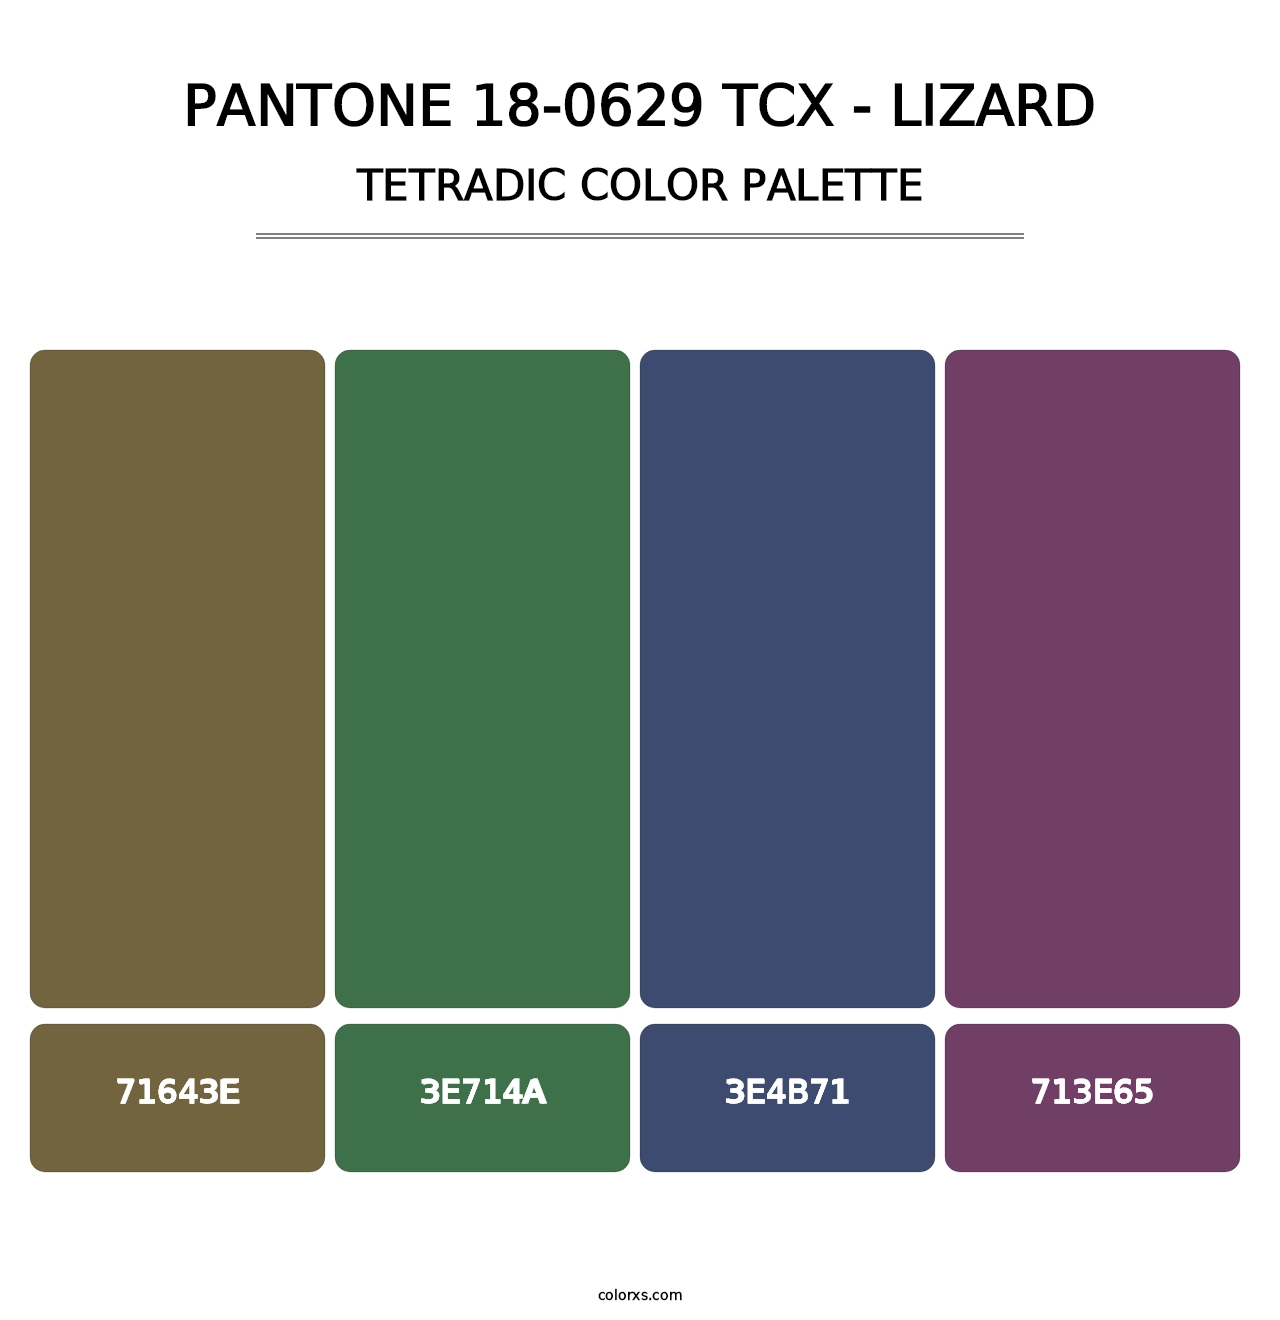 PANTONE 18-0629 TCX - Lizard - Tetradic Color Palette